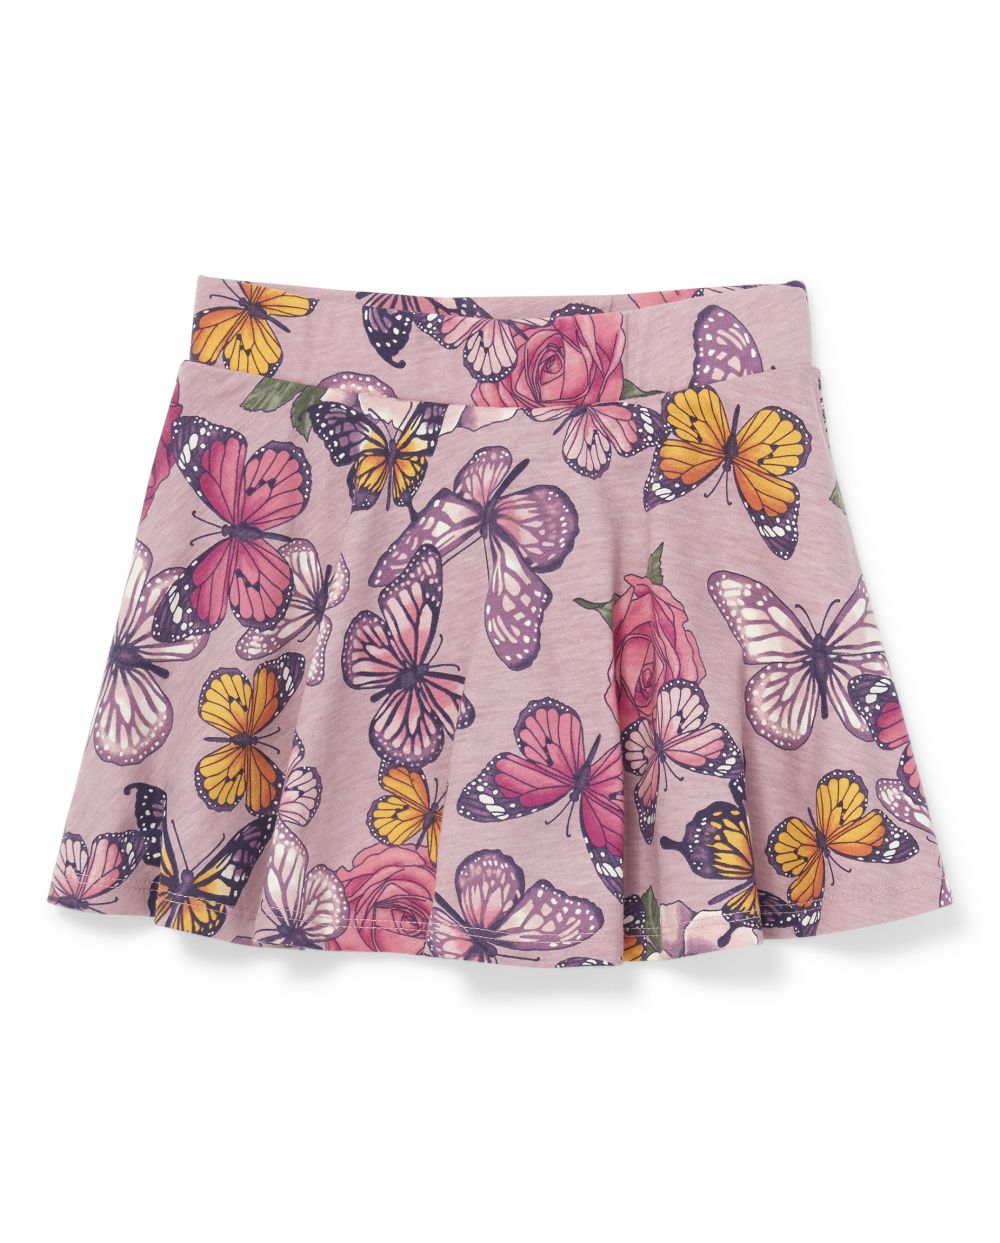 Girls Matchables Butterfly Print Knit Skort